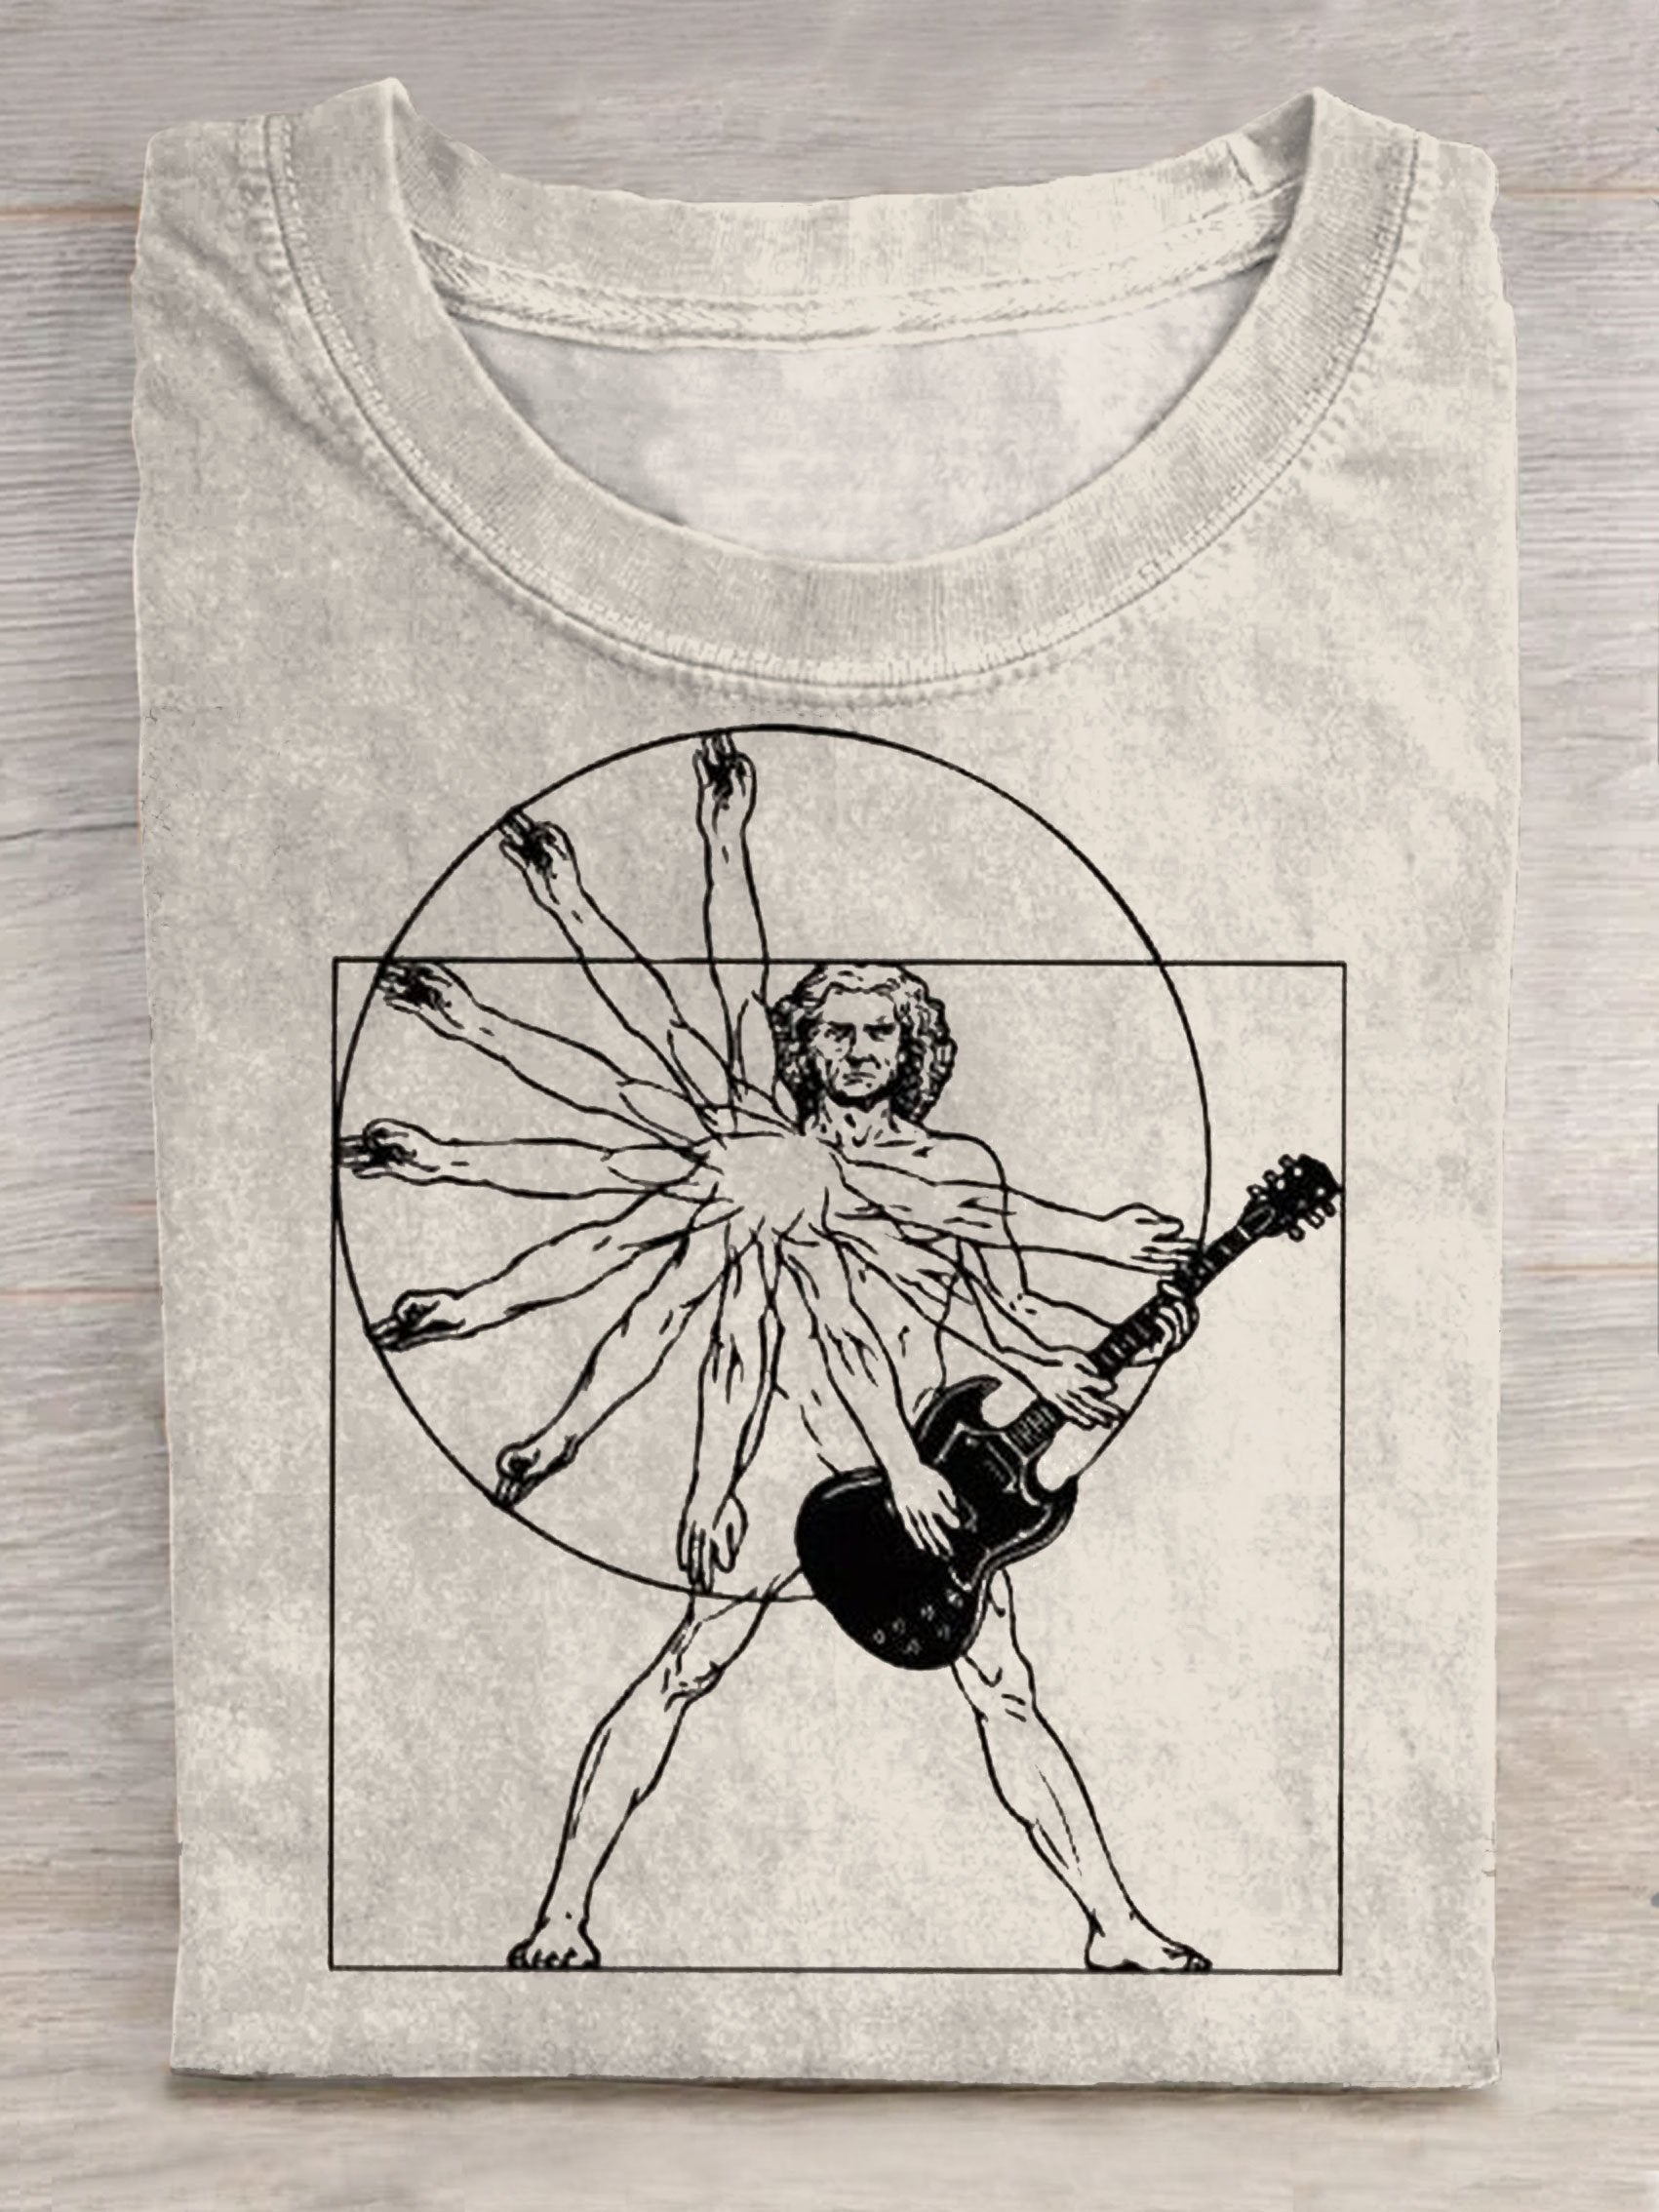 A Band Anatomy Art Printed T-shirt